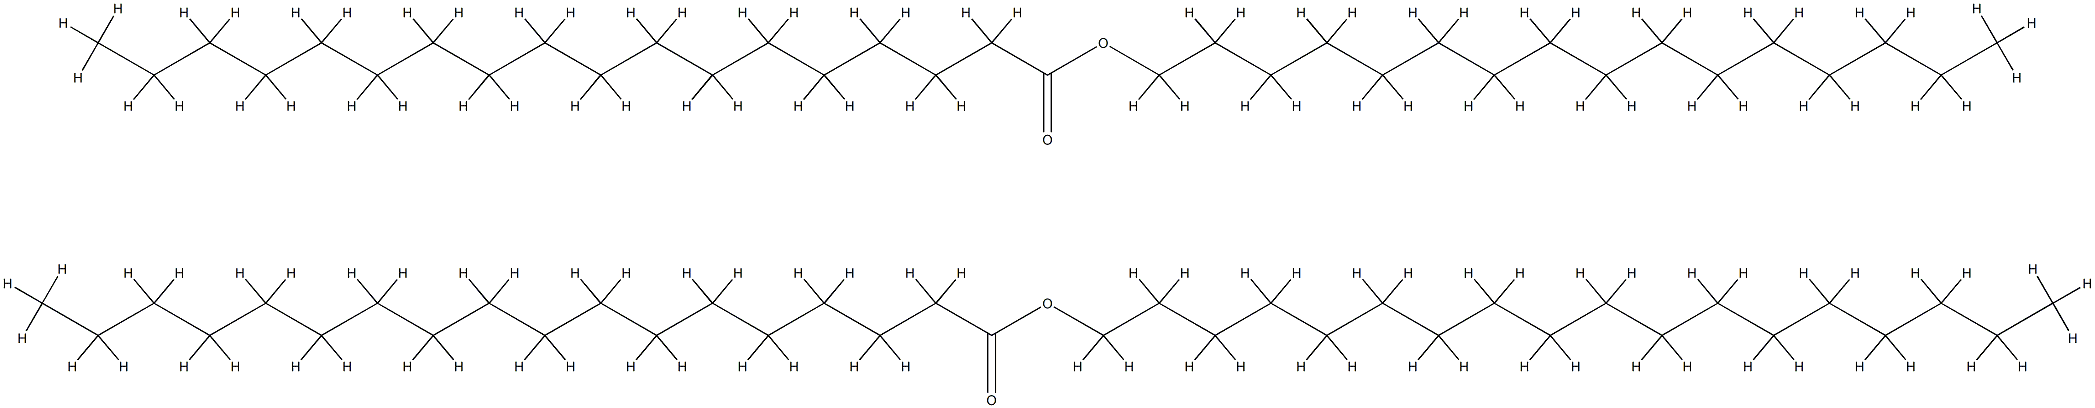 Octadecanoic acid, C16-18-alkyl esters